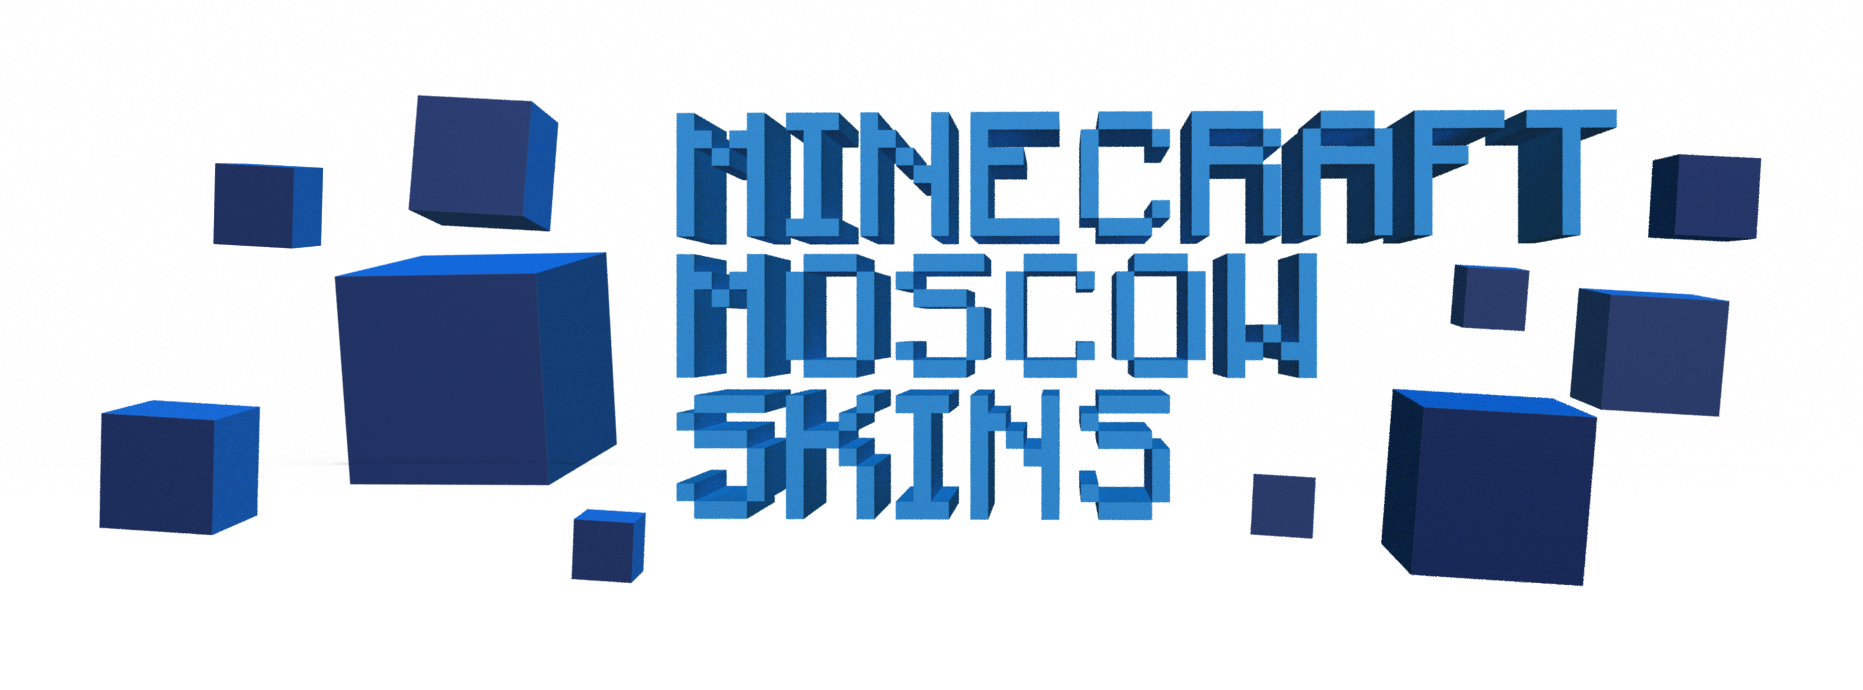 Skins for Minecraft.